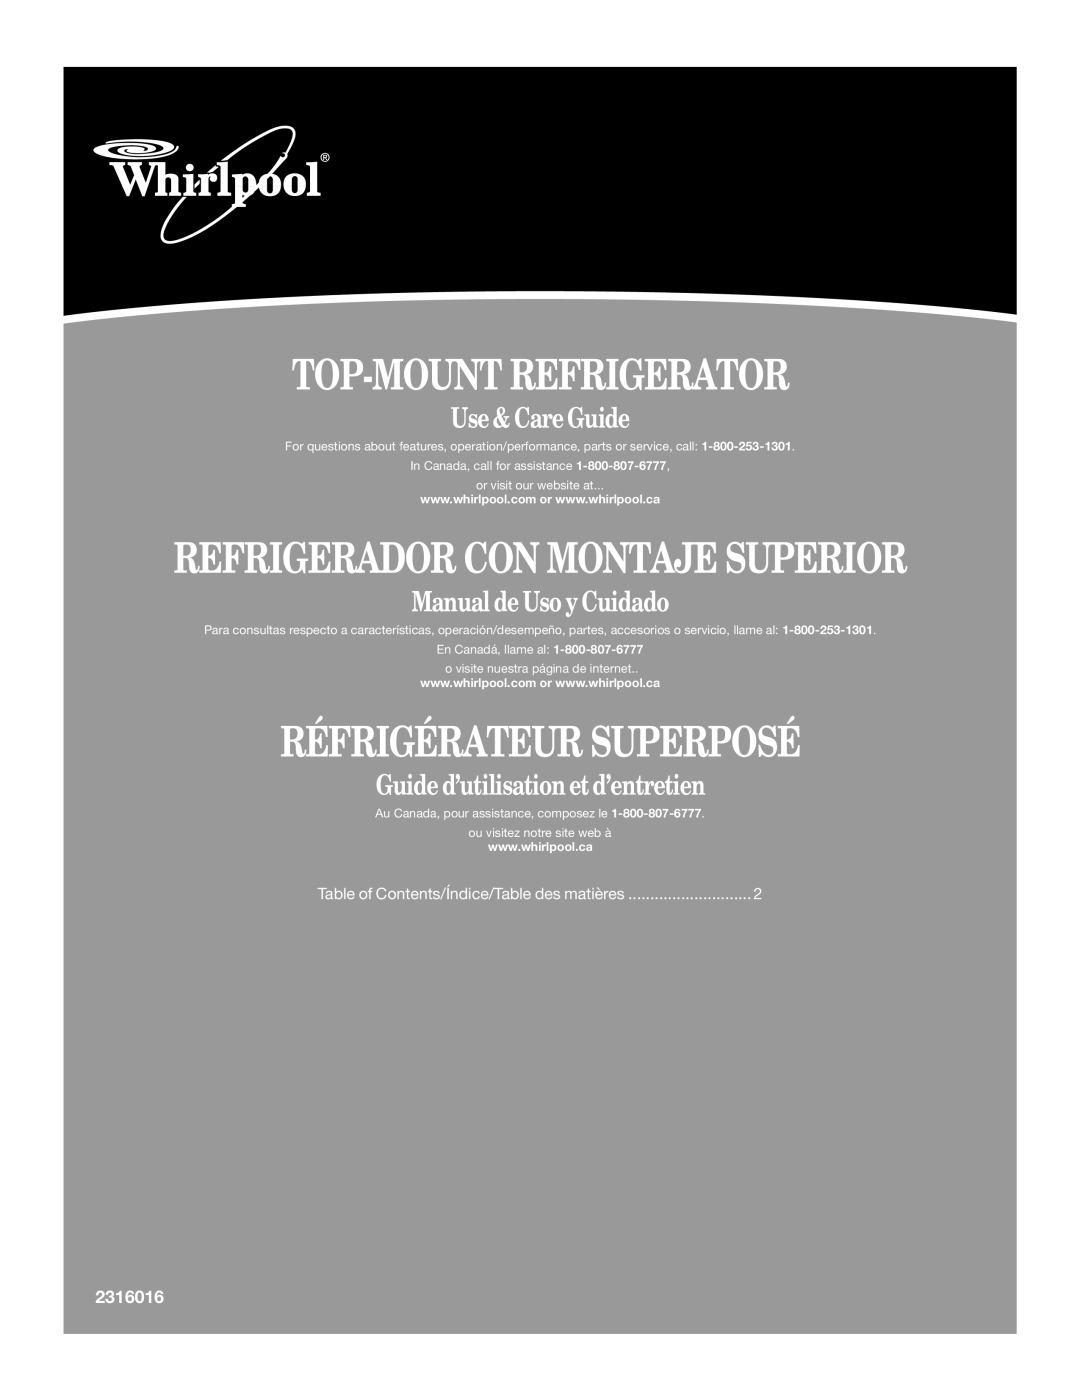 Whirlpool W8TXEGFYB manual Top-Mount Refrigerator, Refrigerador Con Montaje Superior, Réfrigérateur Superposé, 2316016 